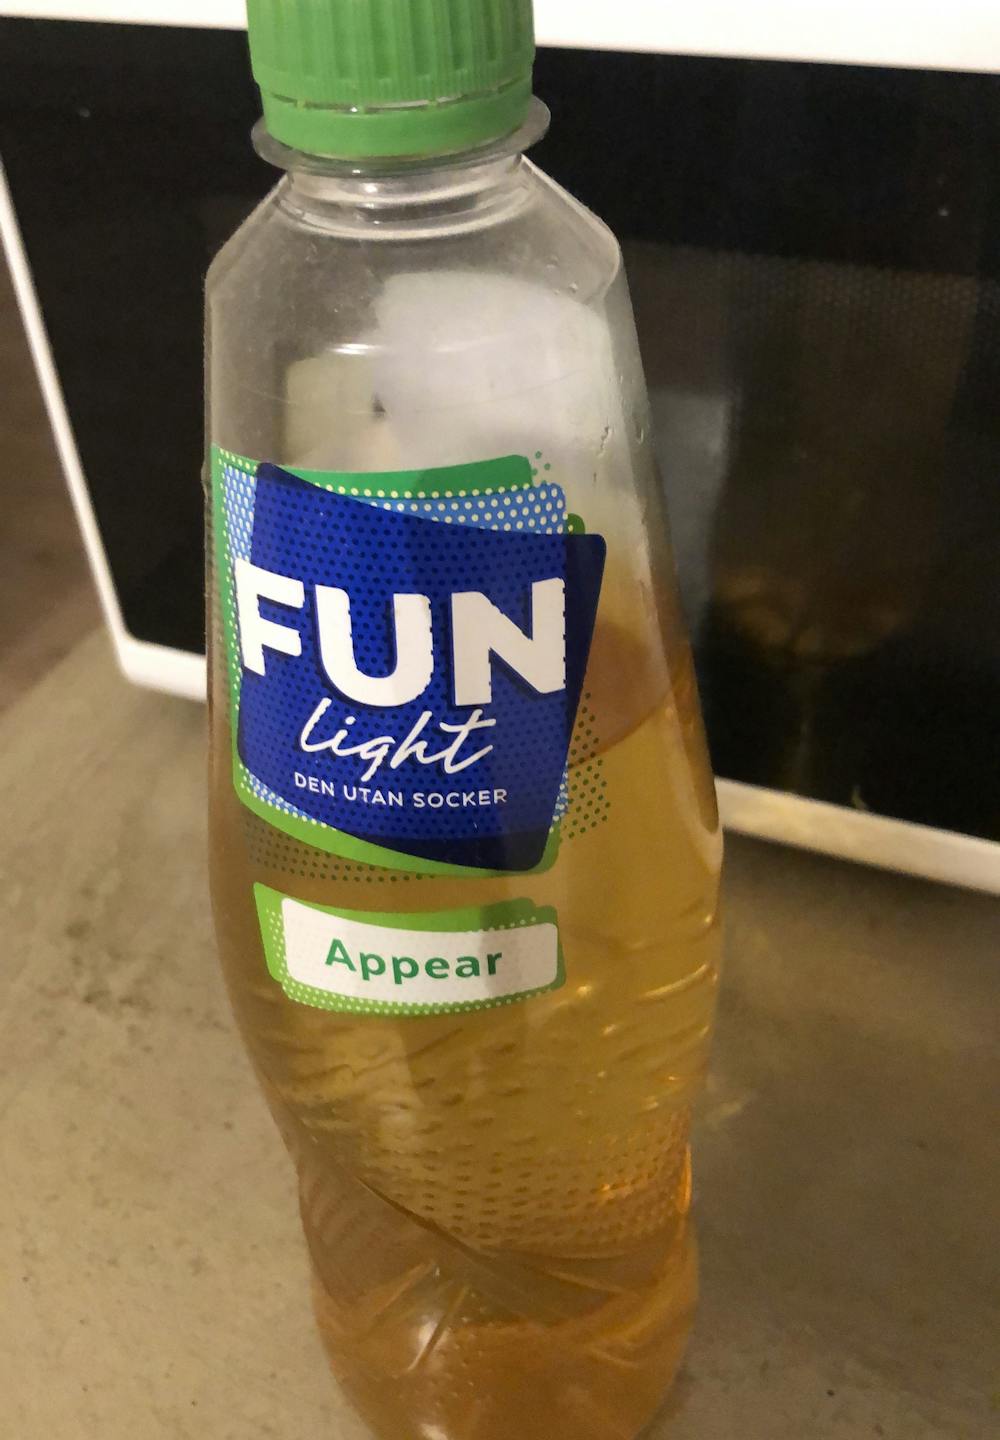 Fun light appear, Fun light